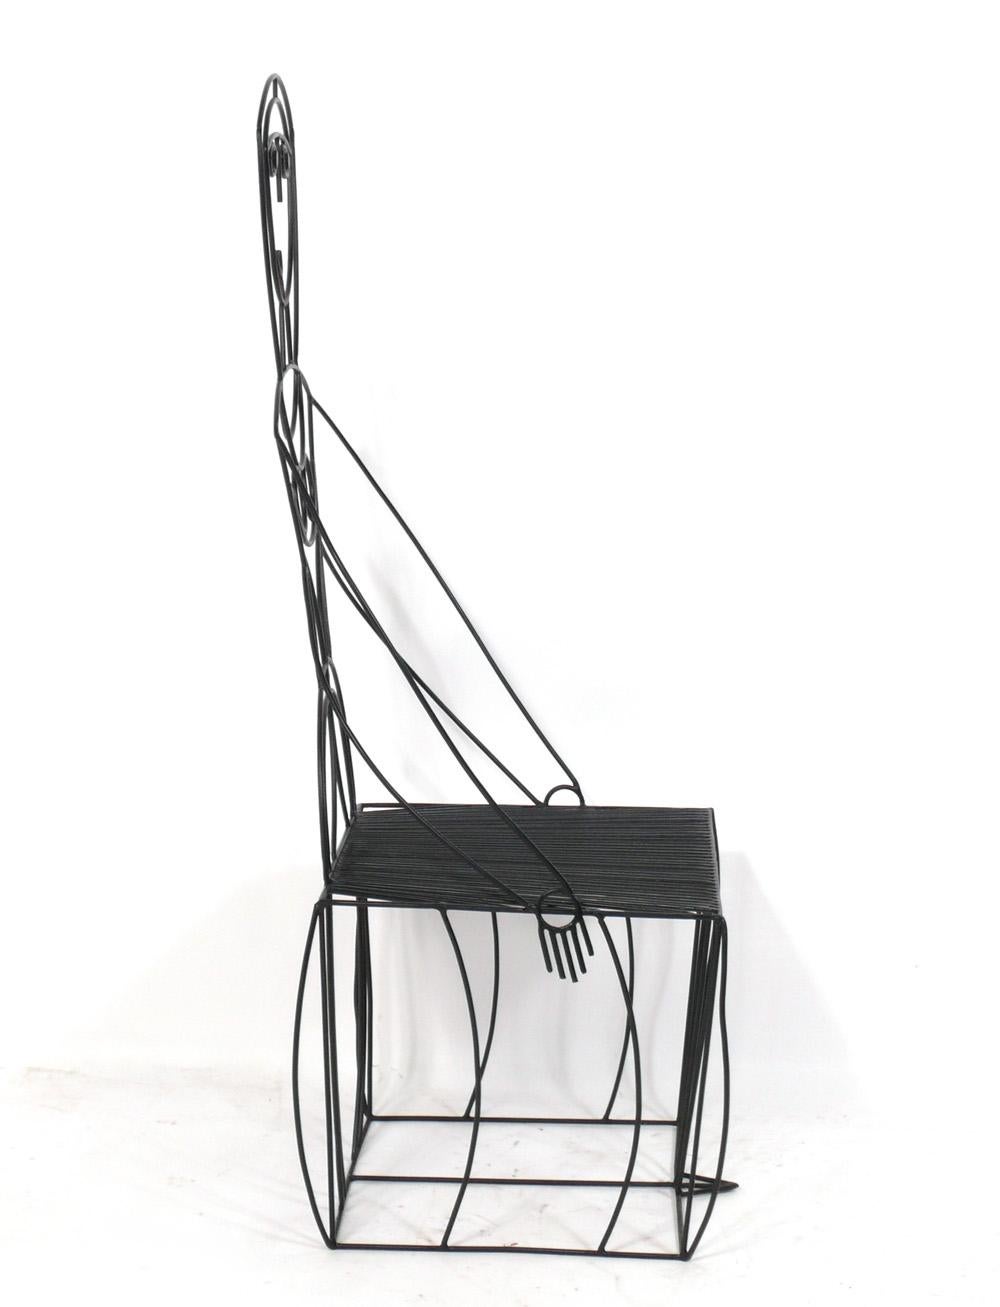 John Risley Sculptural Iron Chairs 1